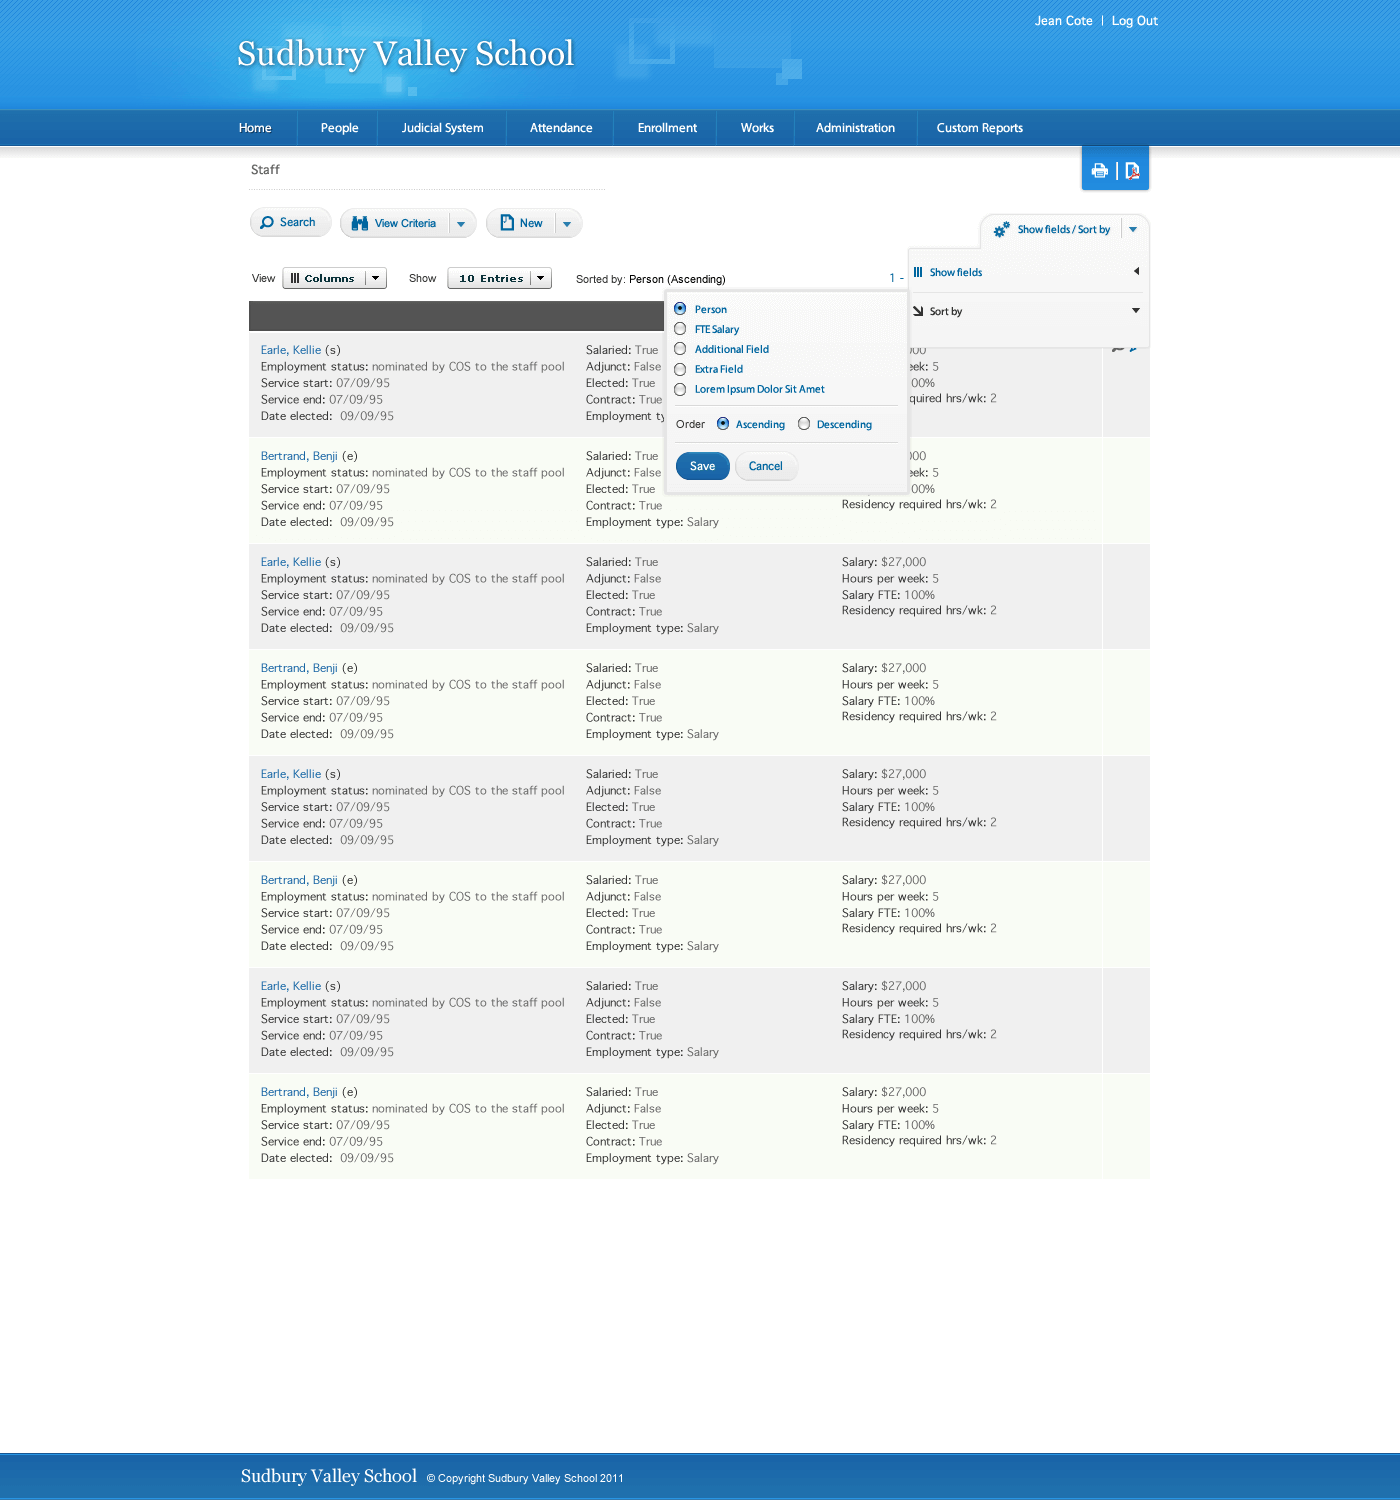 A screenshot of the Sudbury Valley School CMS datatable